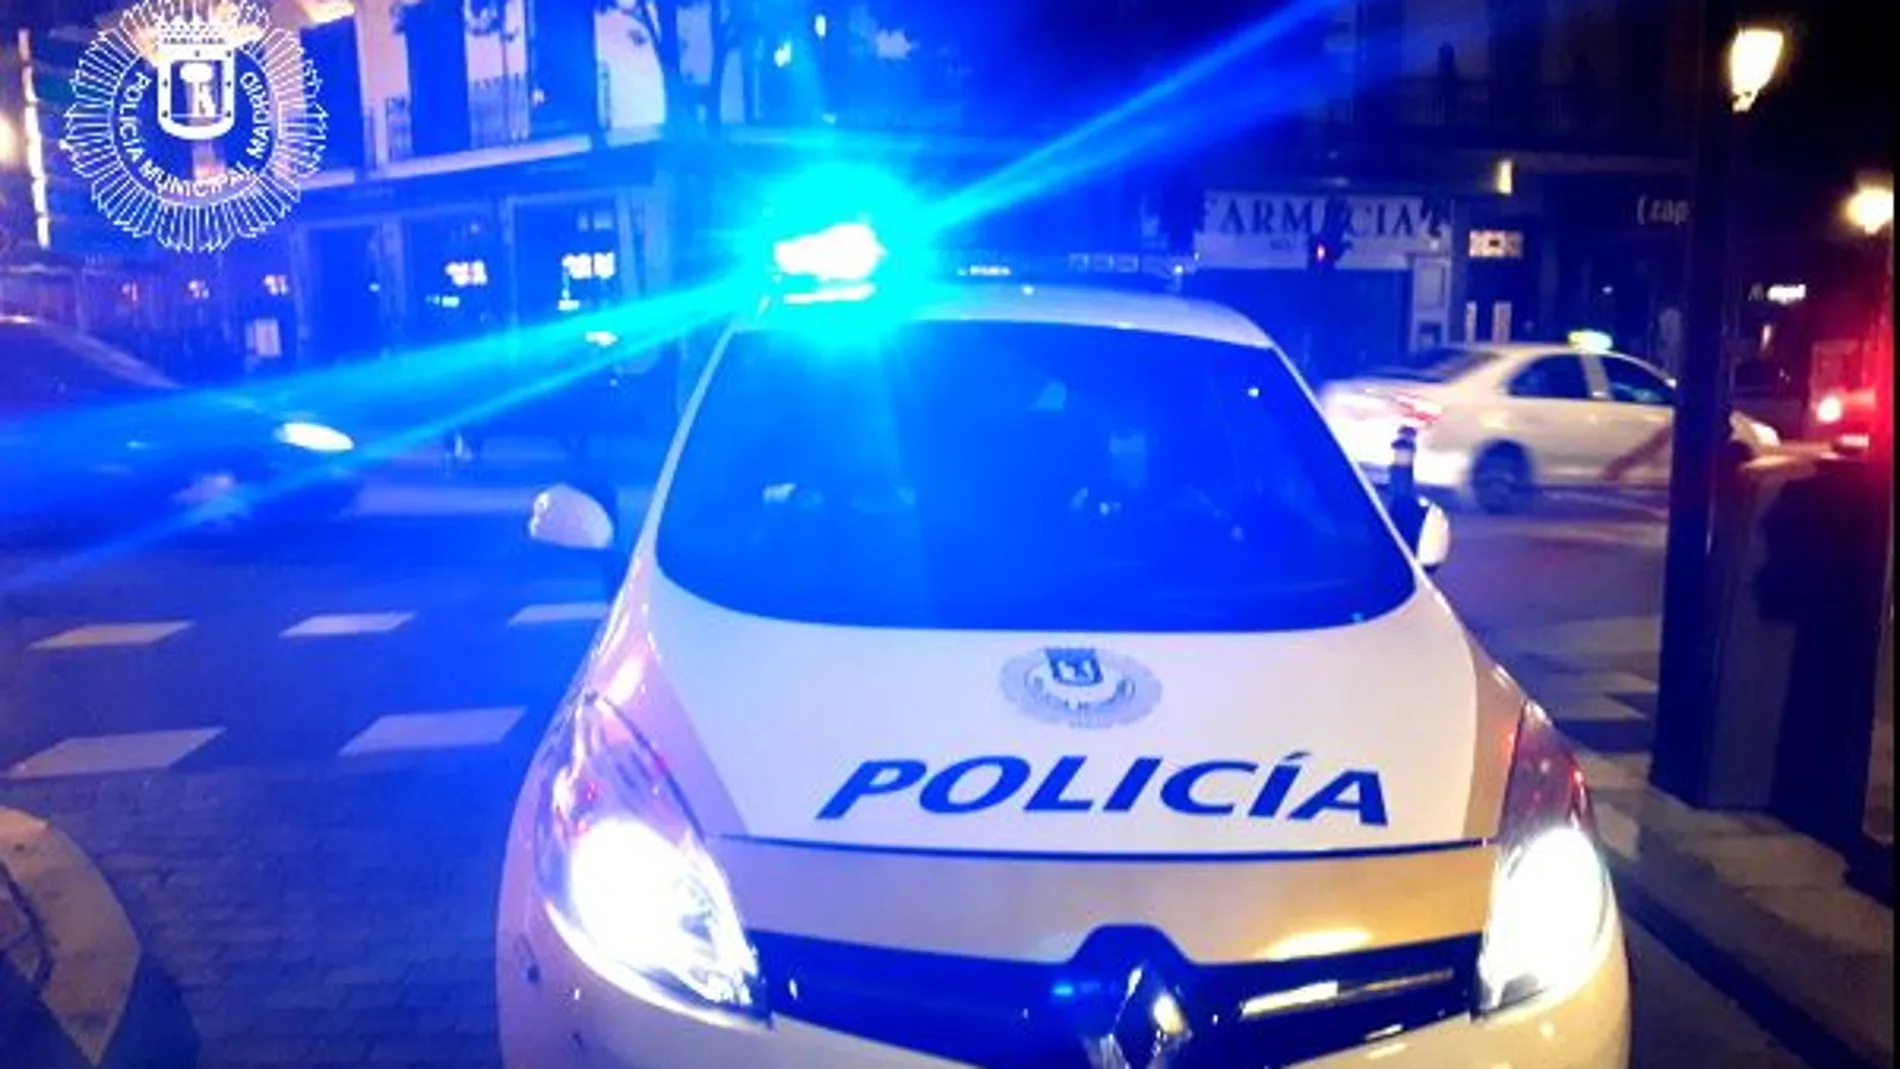 Coche Policía Municipal Madrid de juguete